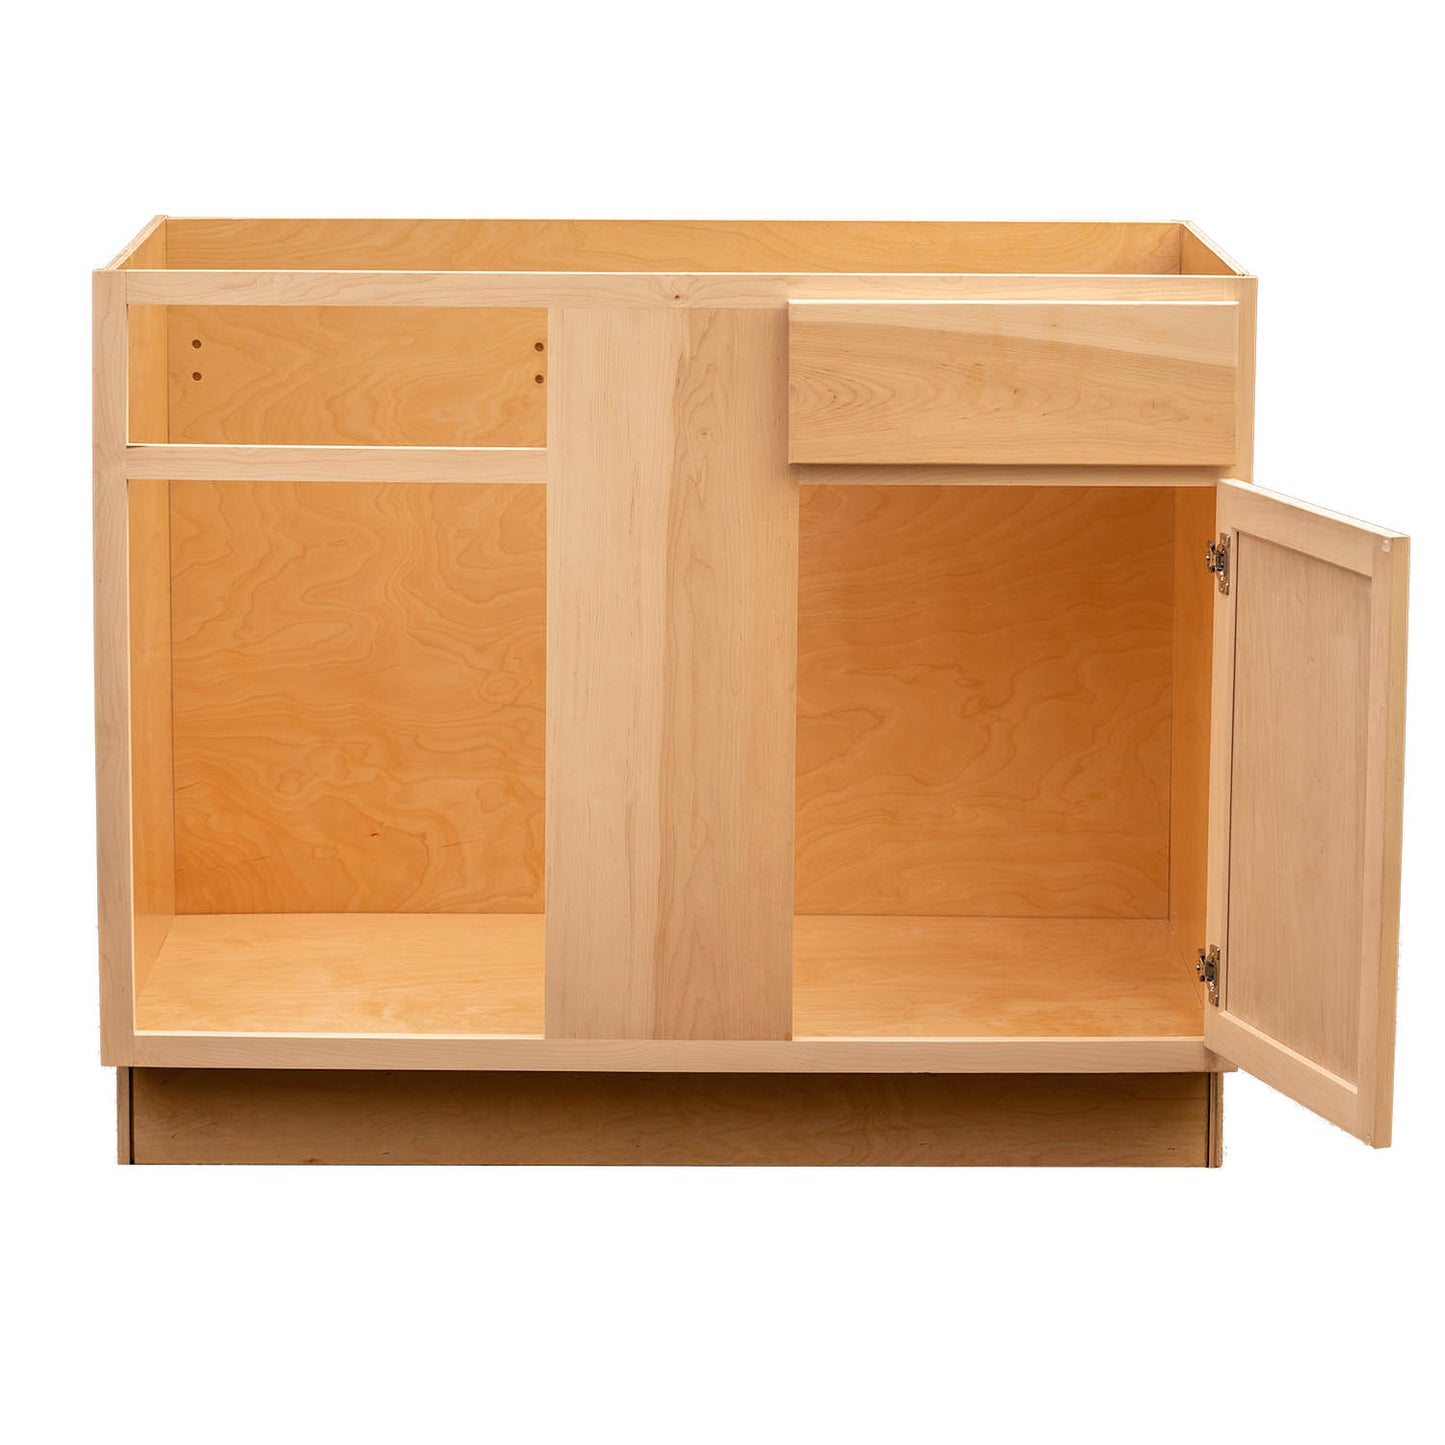 Quicklock RTA (Ready-to-Assemble) Raw Maple Blind Base Corner Cabinet | 39"Wx34.5"Hx24"D